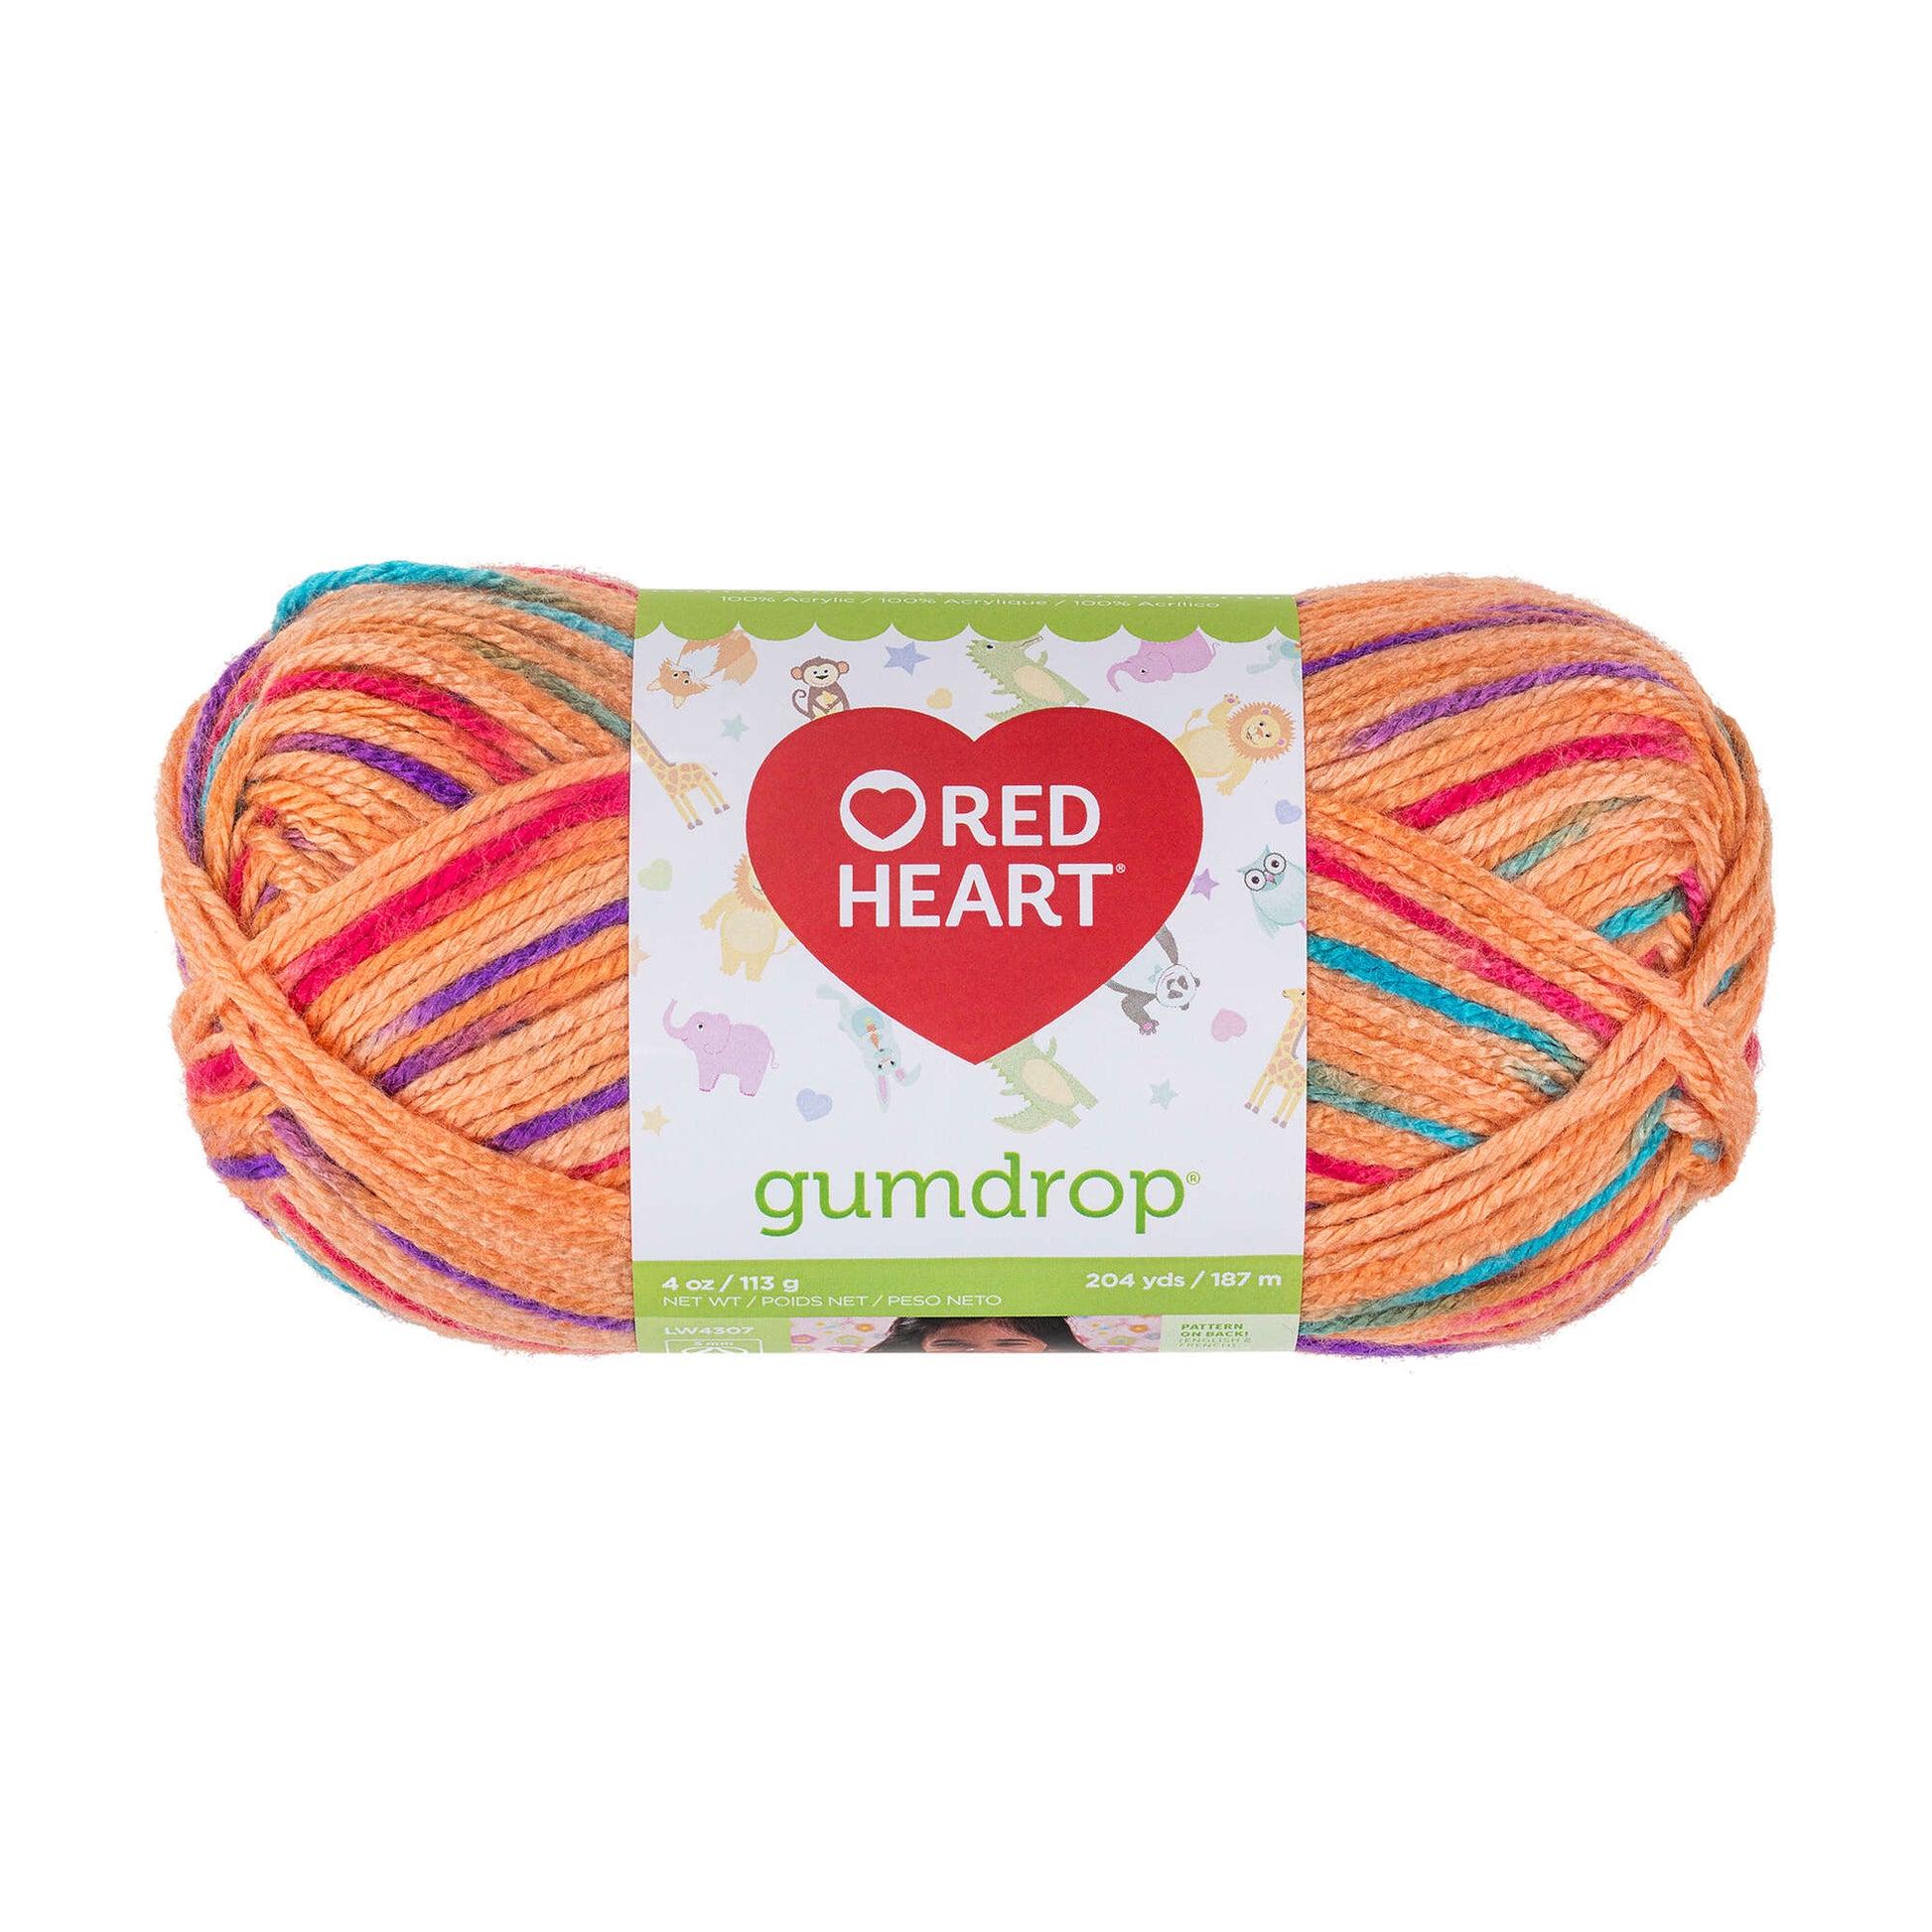 Red Heart Gumdrop Yarn - Discontinued shades